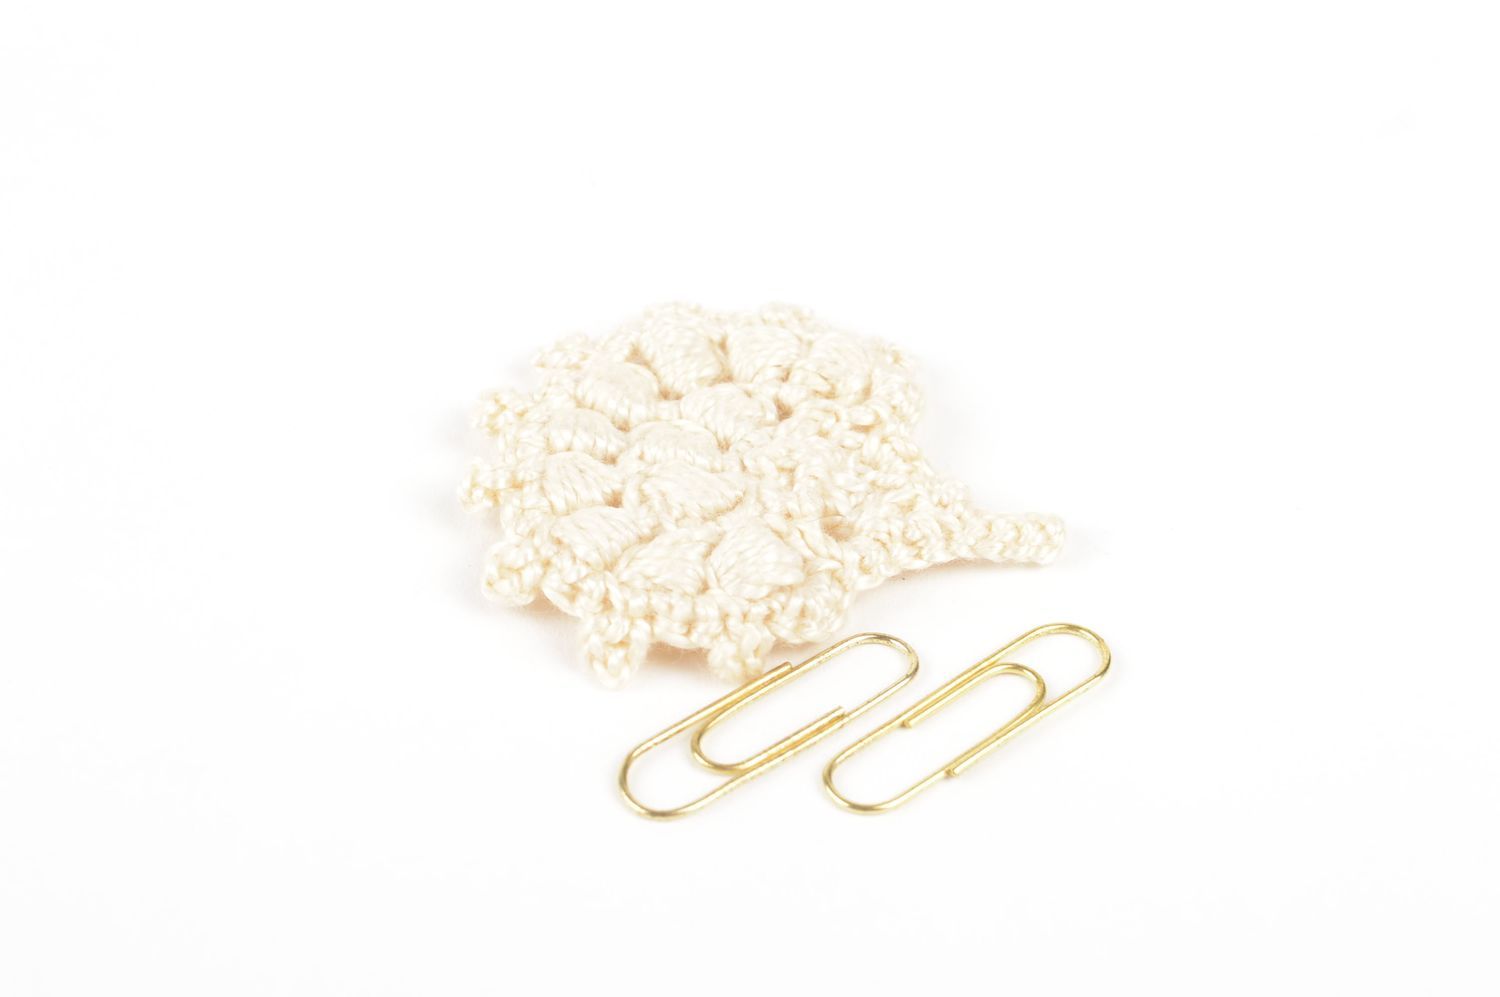 Unusual handmade crochet flower fashion trends art materials jewelry making photo 5